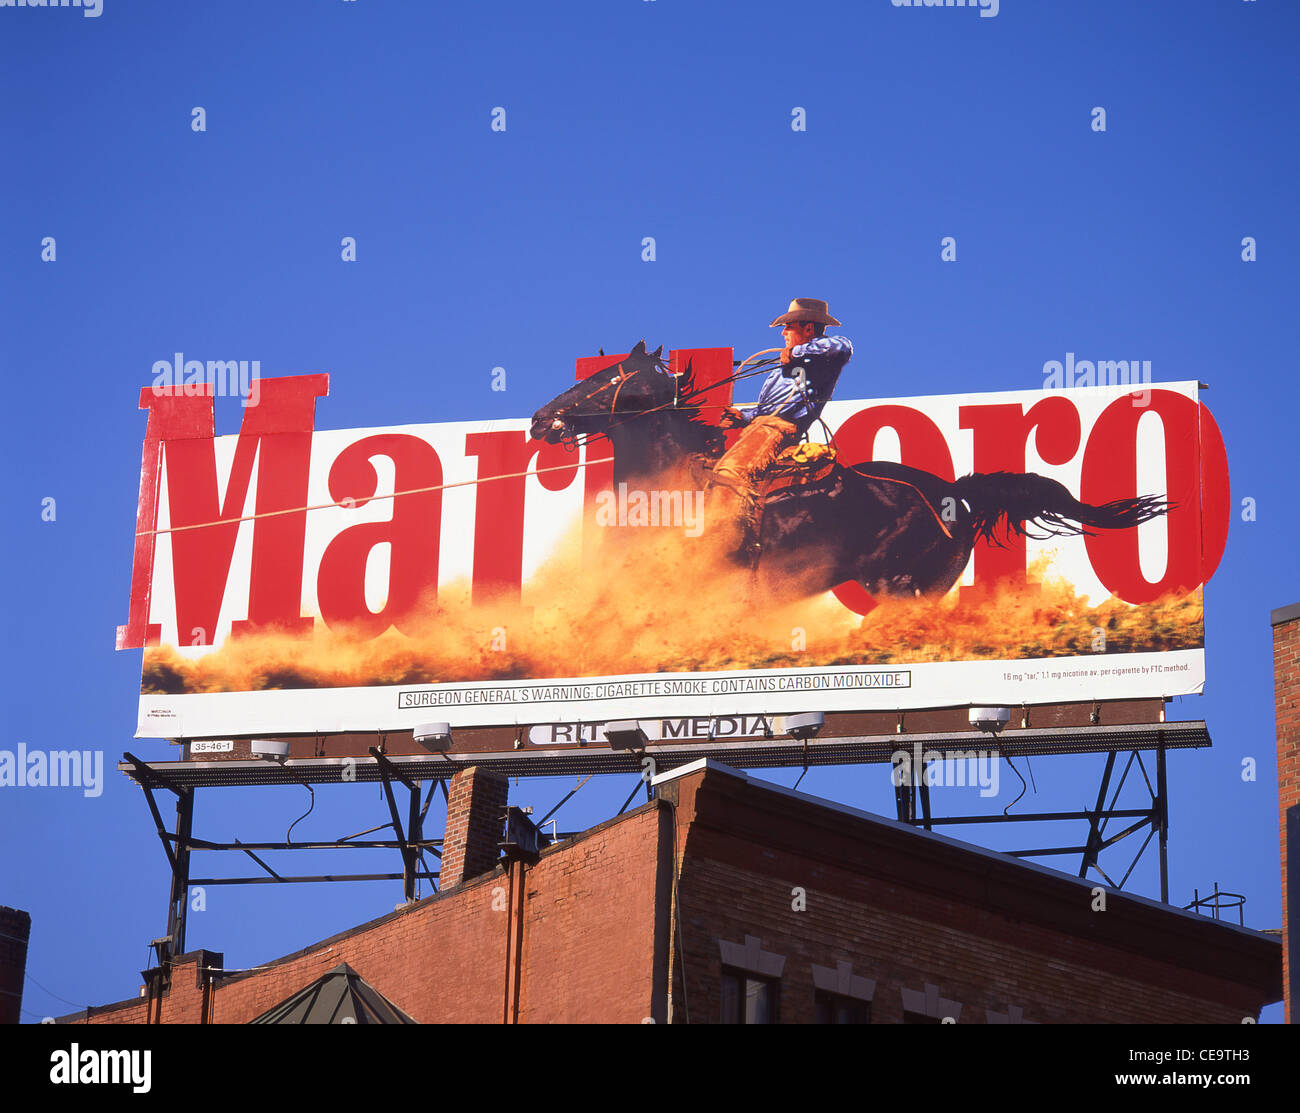 Marlboro cigarettes advertising billboard, Las Vegas, Nevada, United States of America Stock Photo